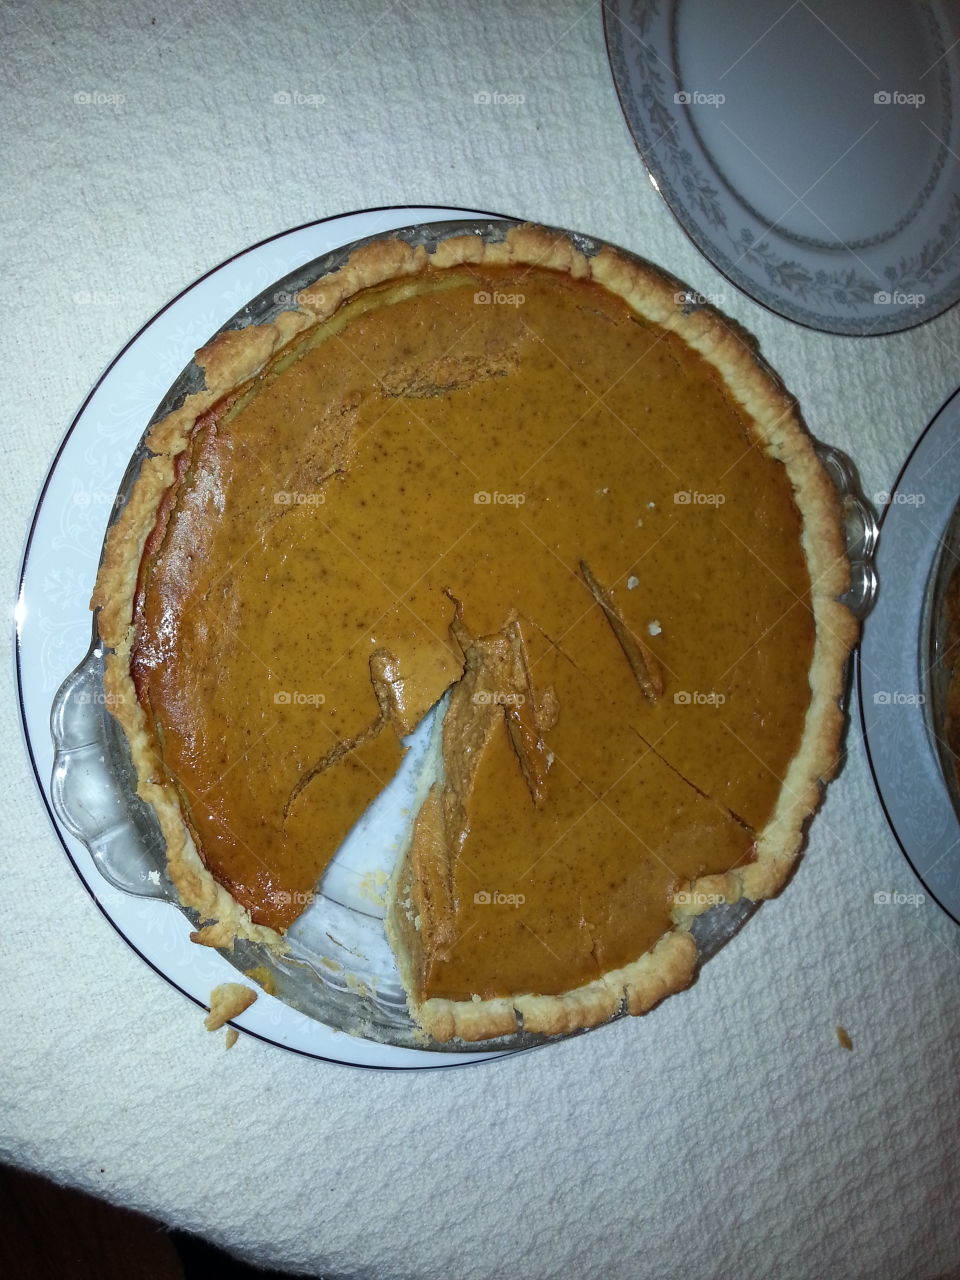 pumpkin pie waiting to be devoured at Thanksgiving